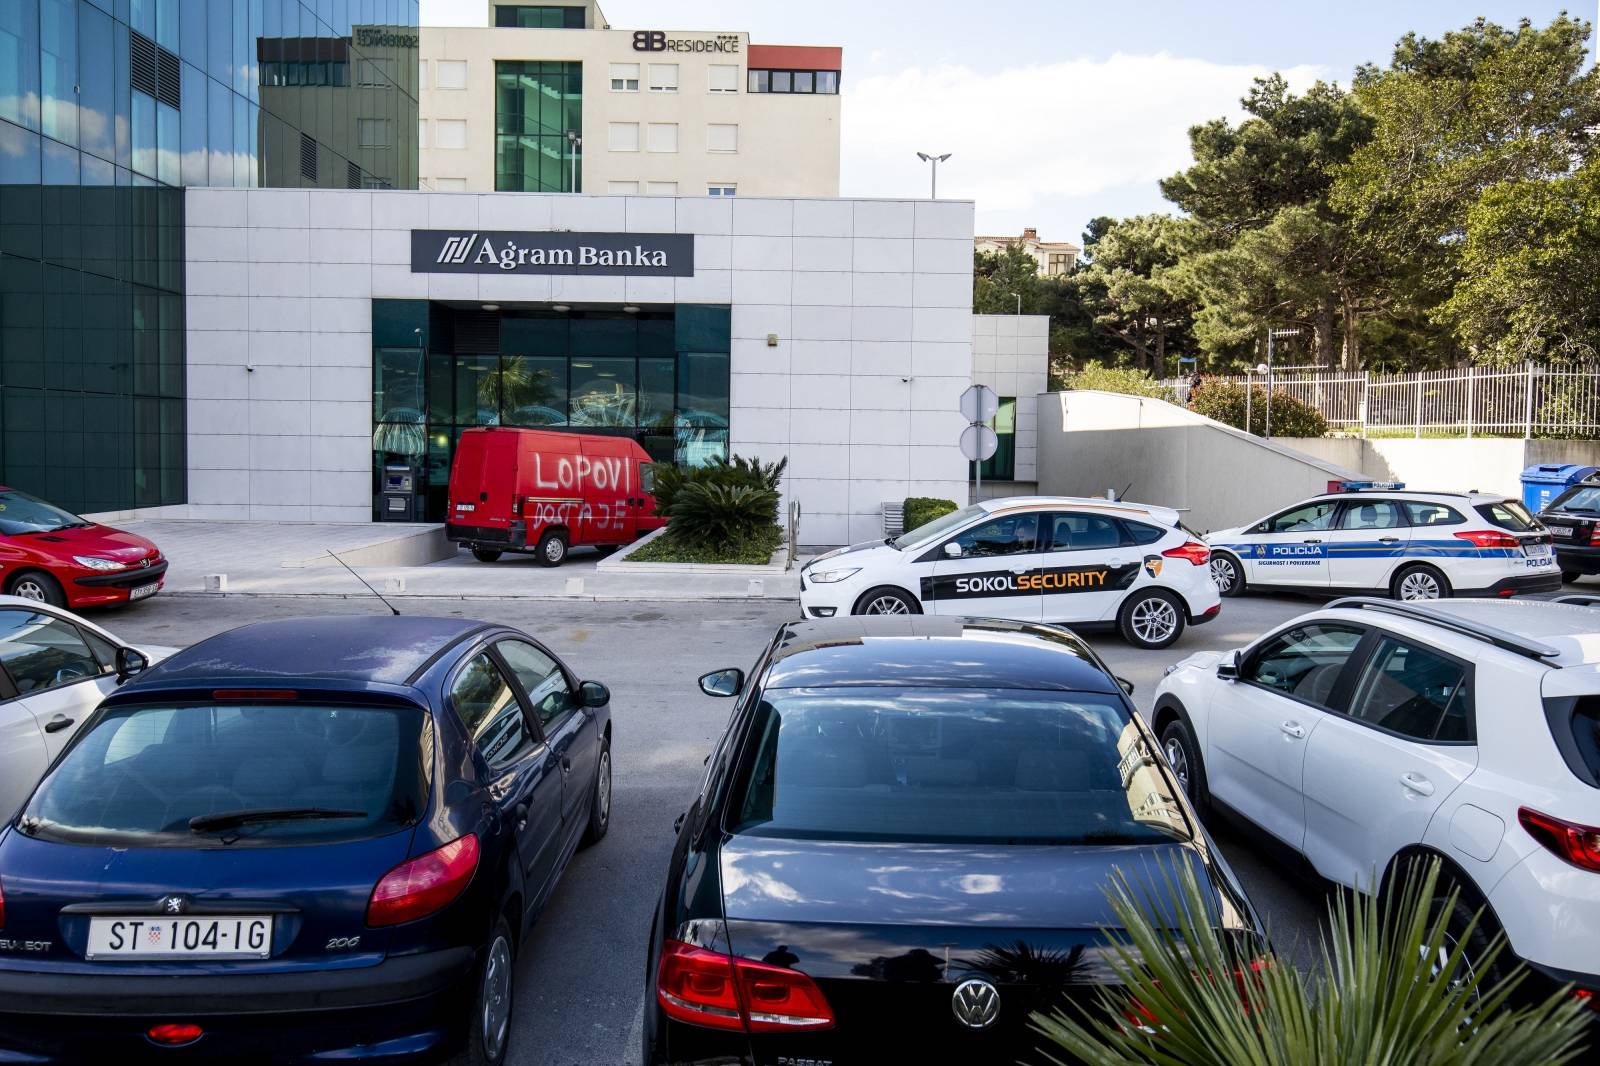 Split: Muškarac kombijem blokirao ulaz u Agram banku